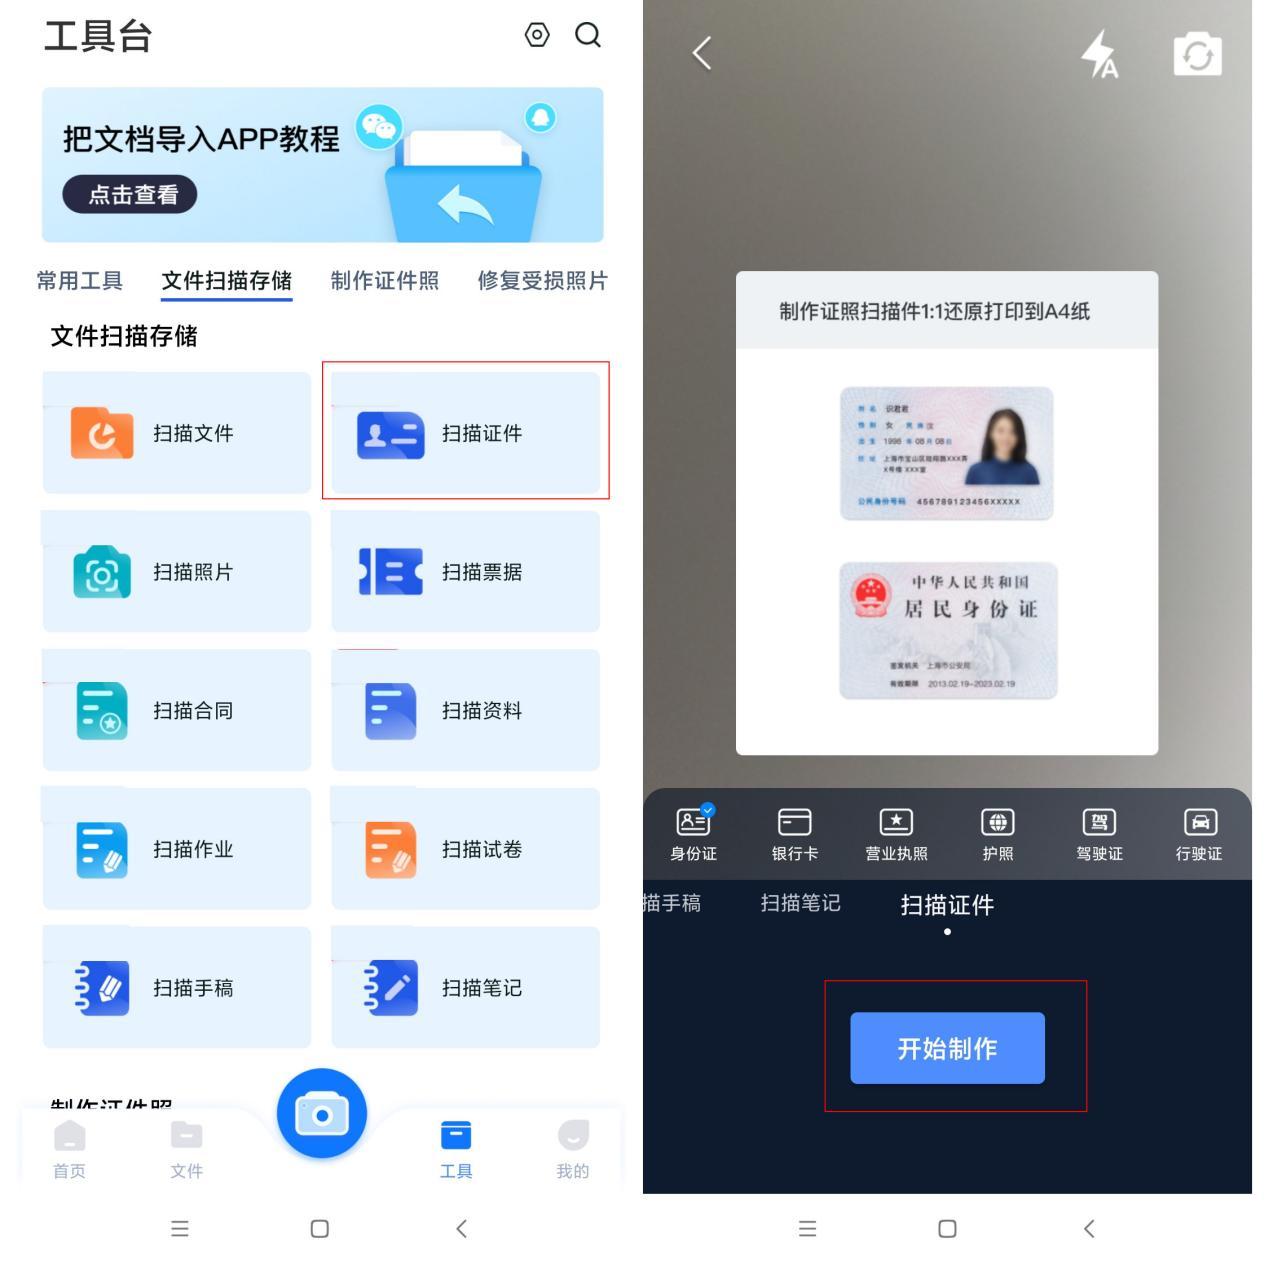 TextIn - 在线免费体验中心 - 香港身份证识别